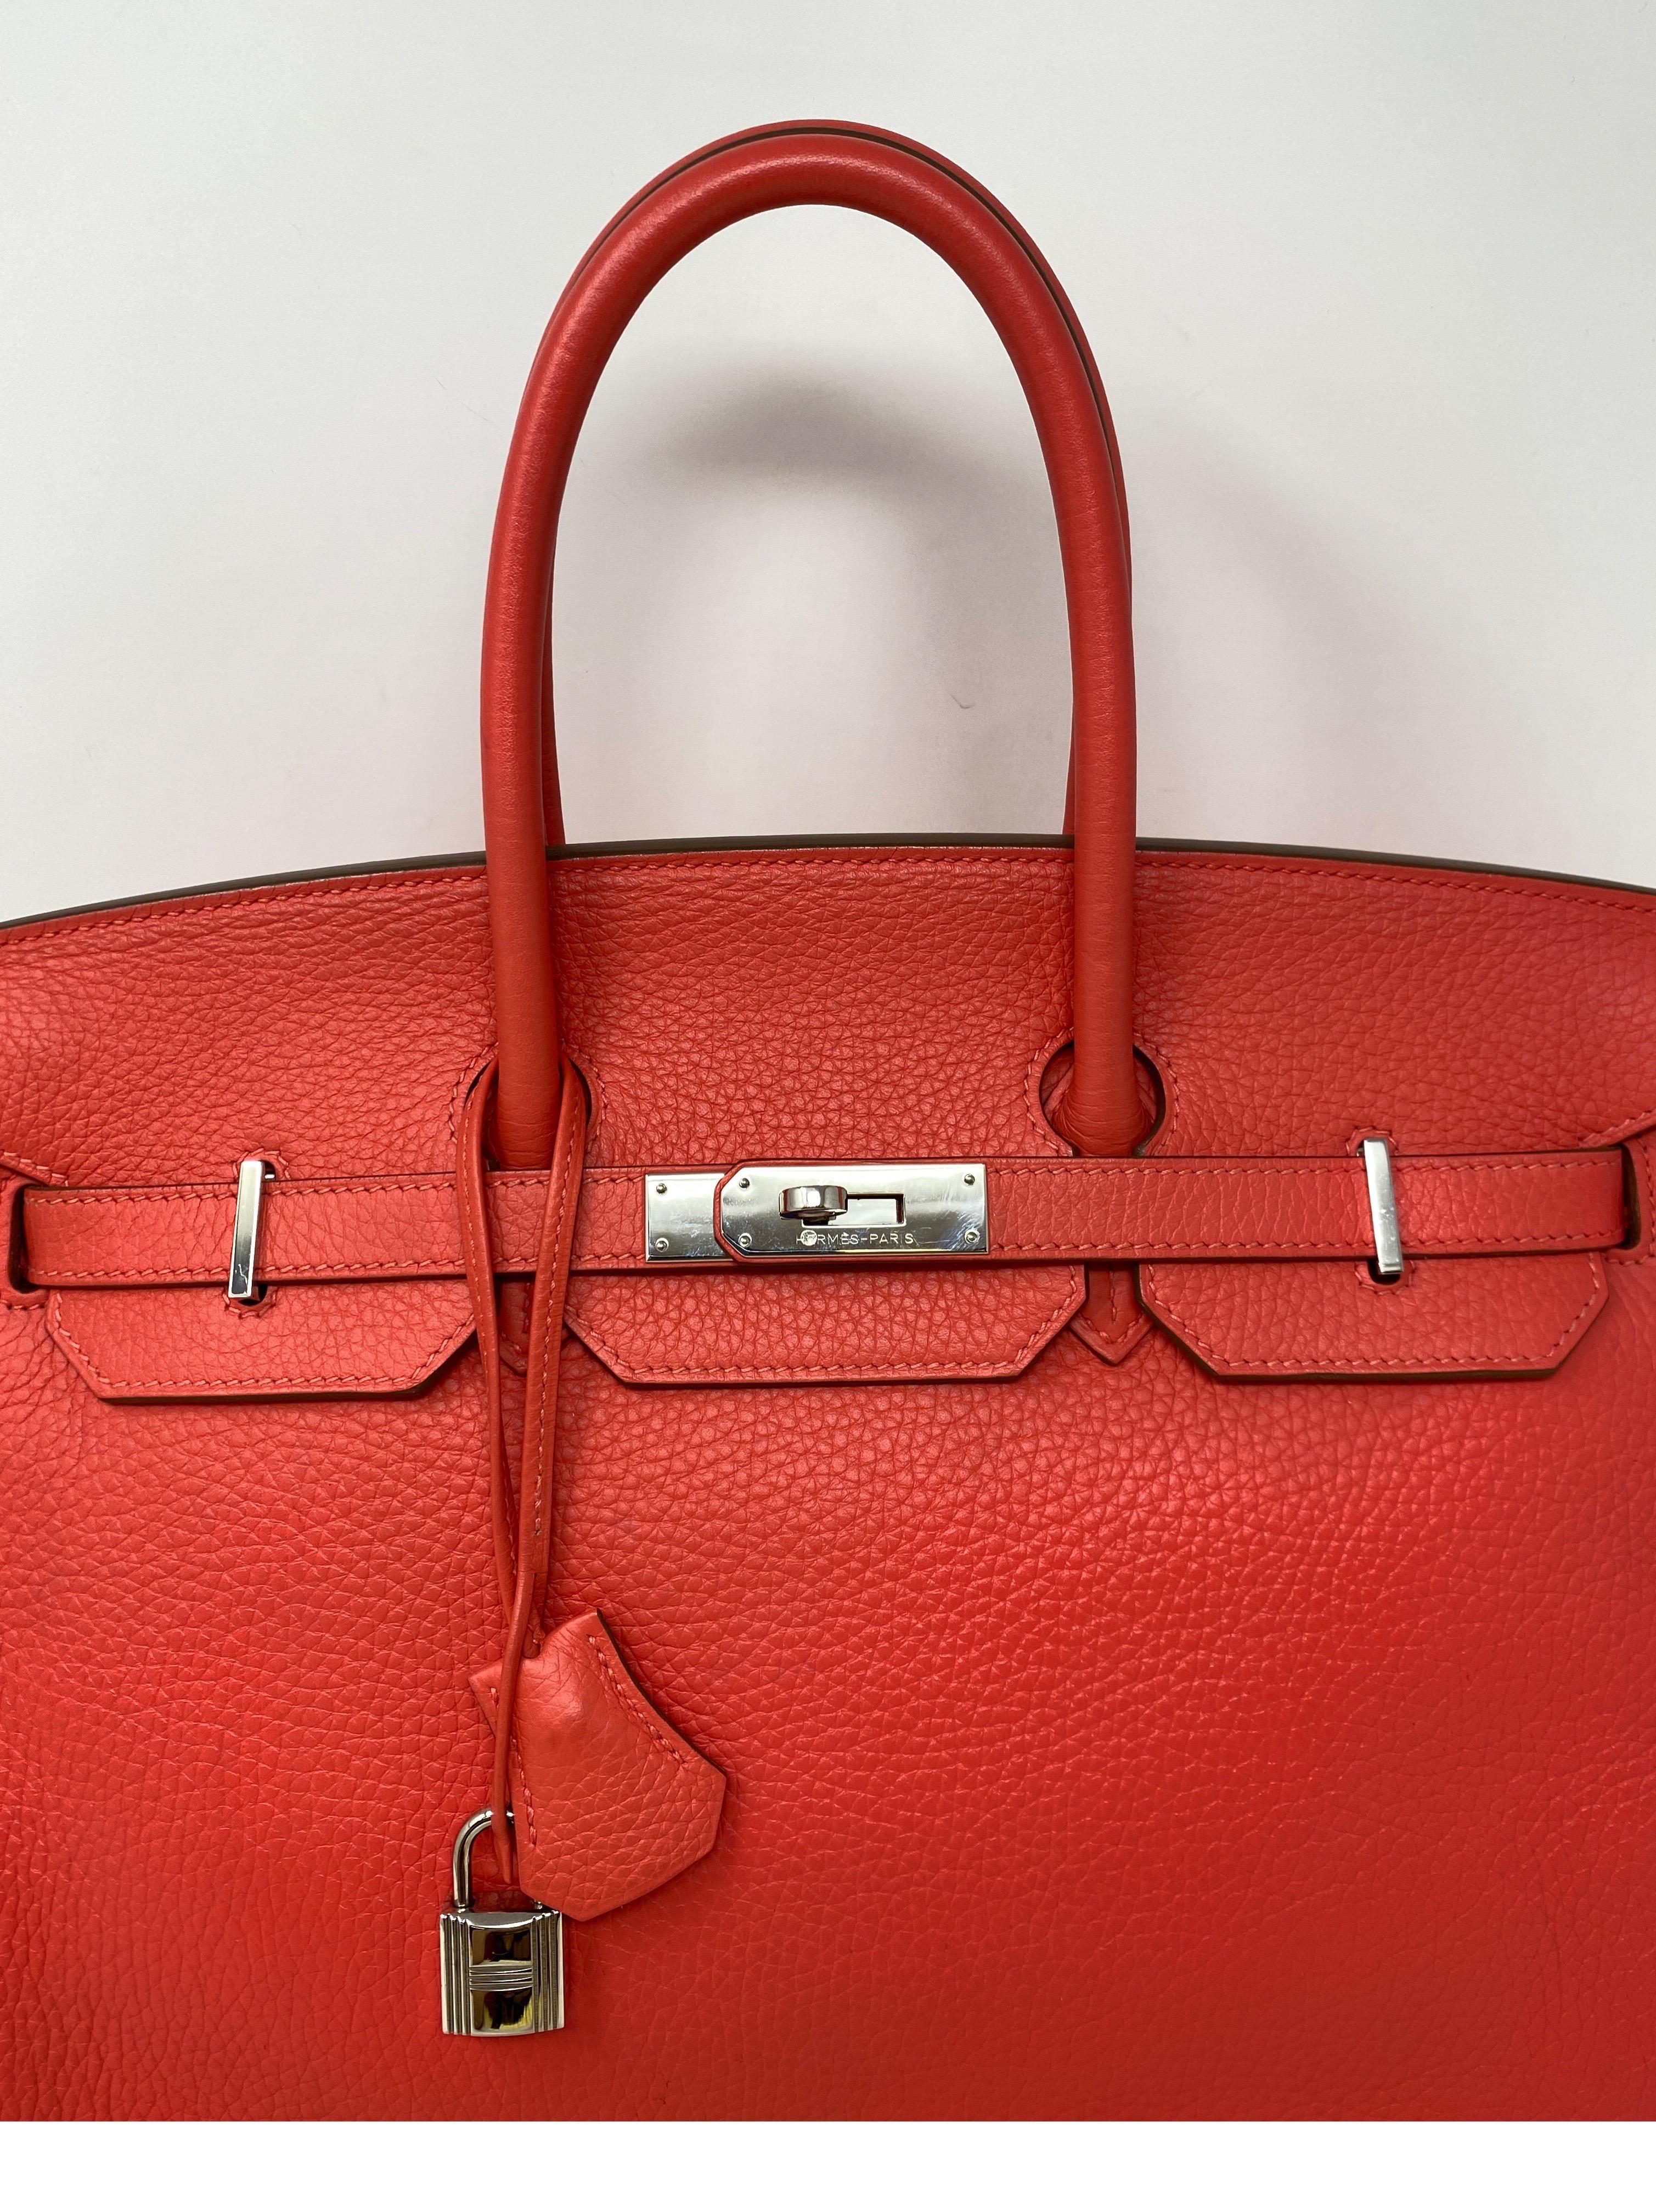 Red Hermes Birkin 35 Rose Jaipur Bag